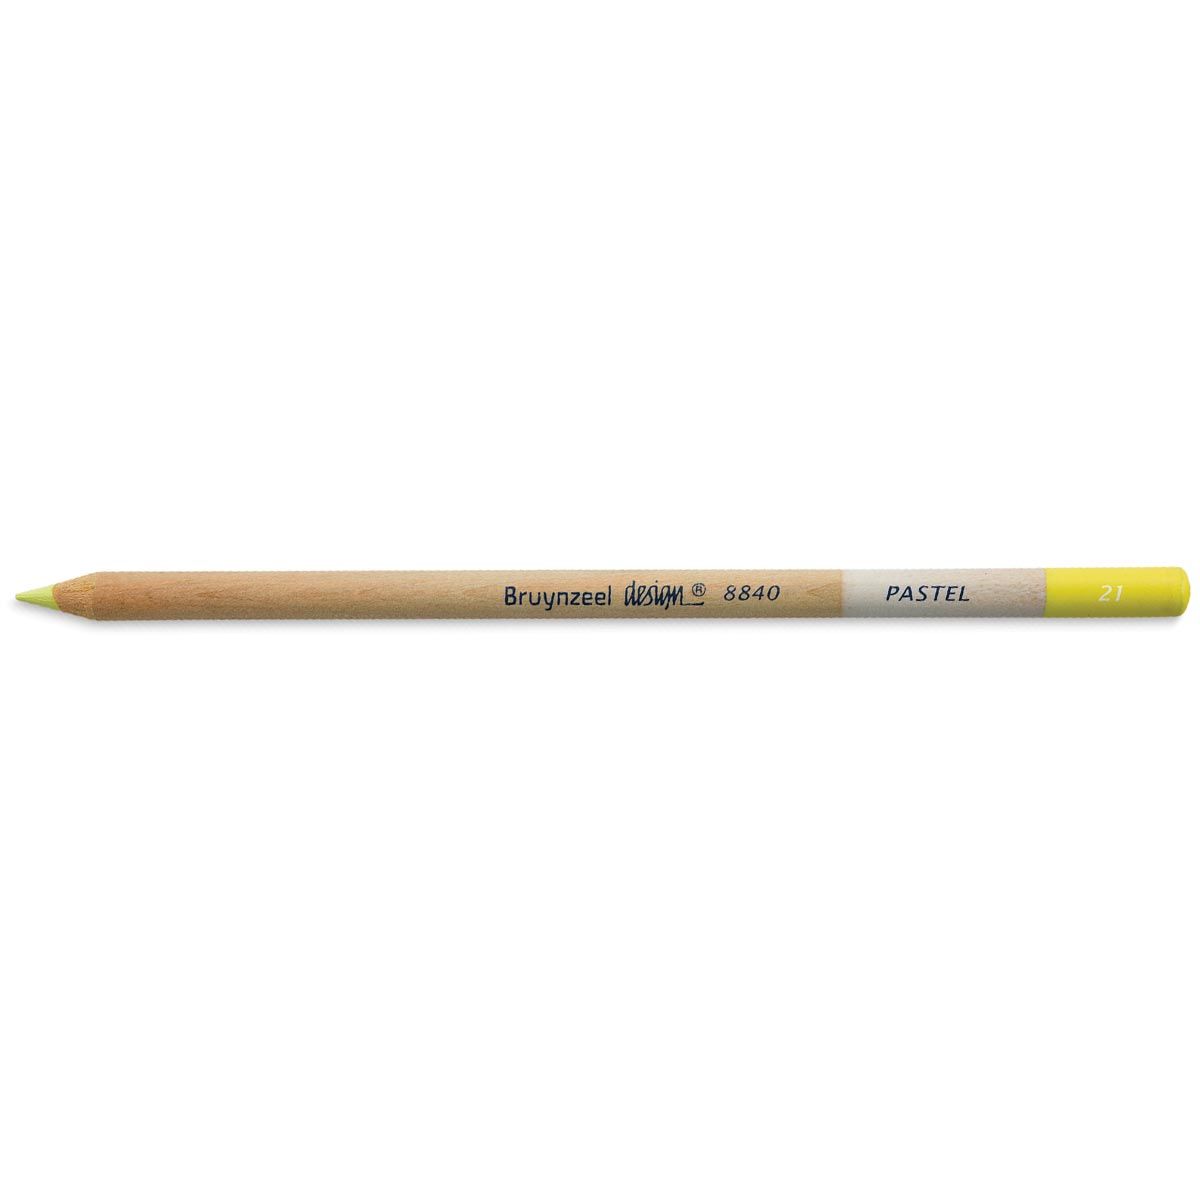 Bruynzeel Design Pastel Pencil - Light Lemon Yellow 21